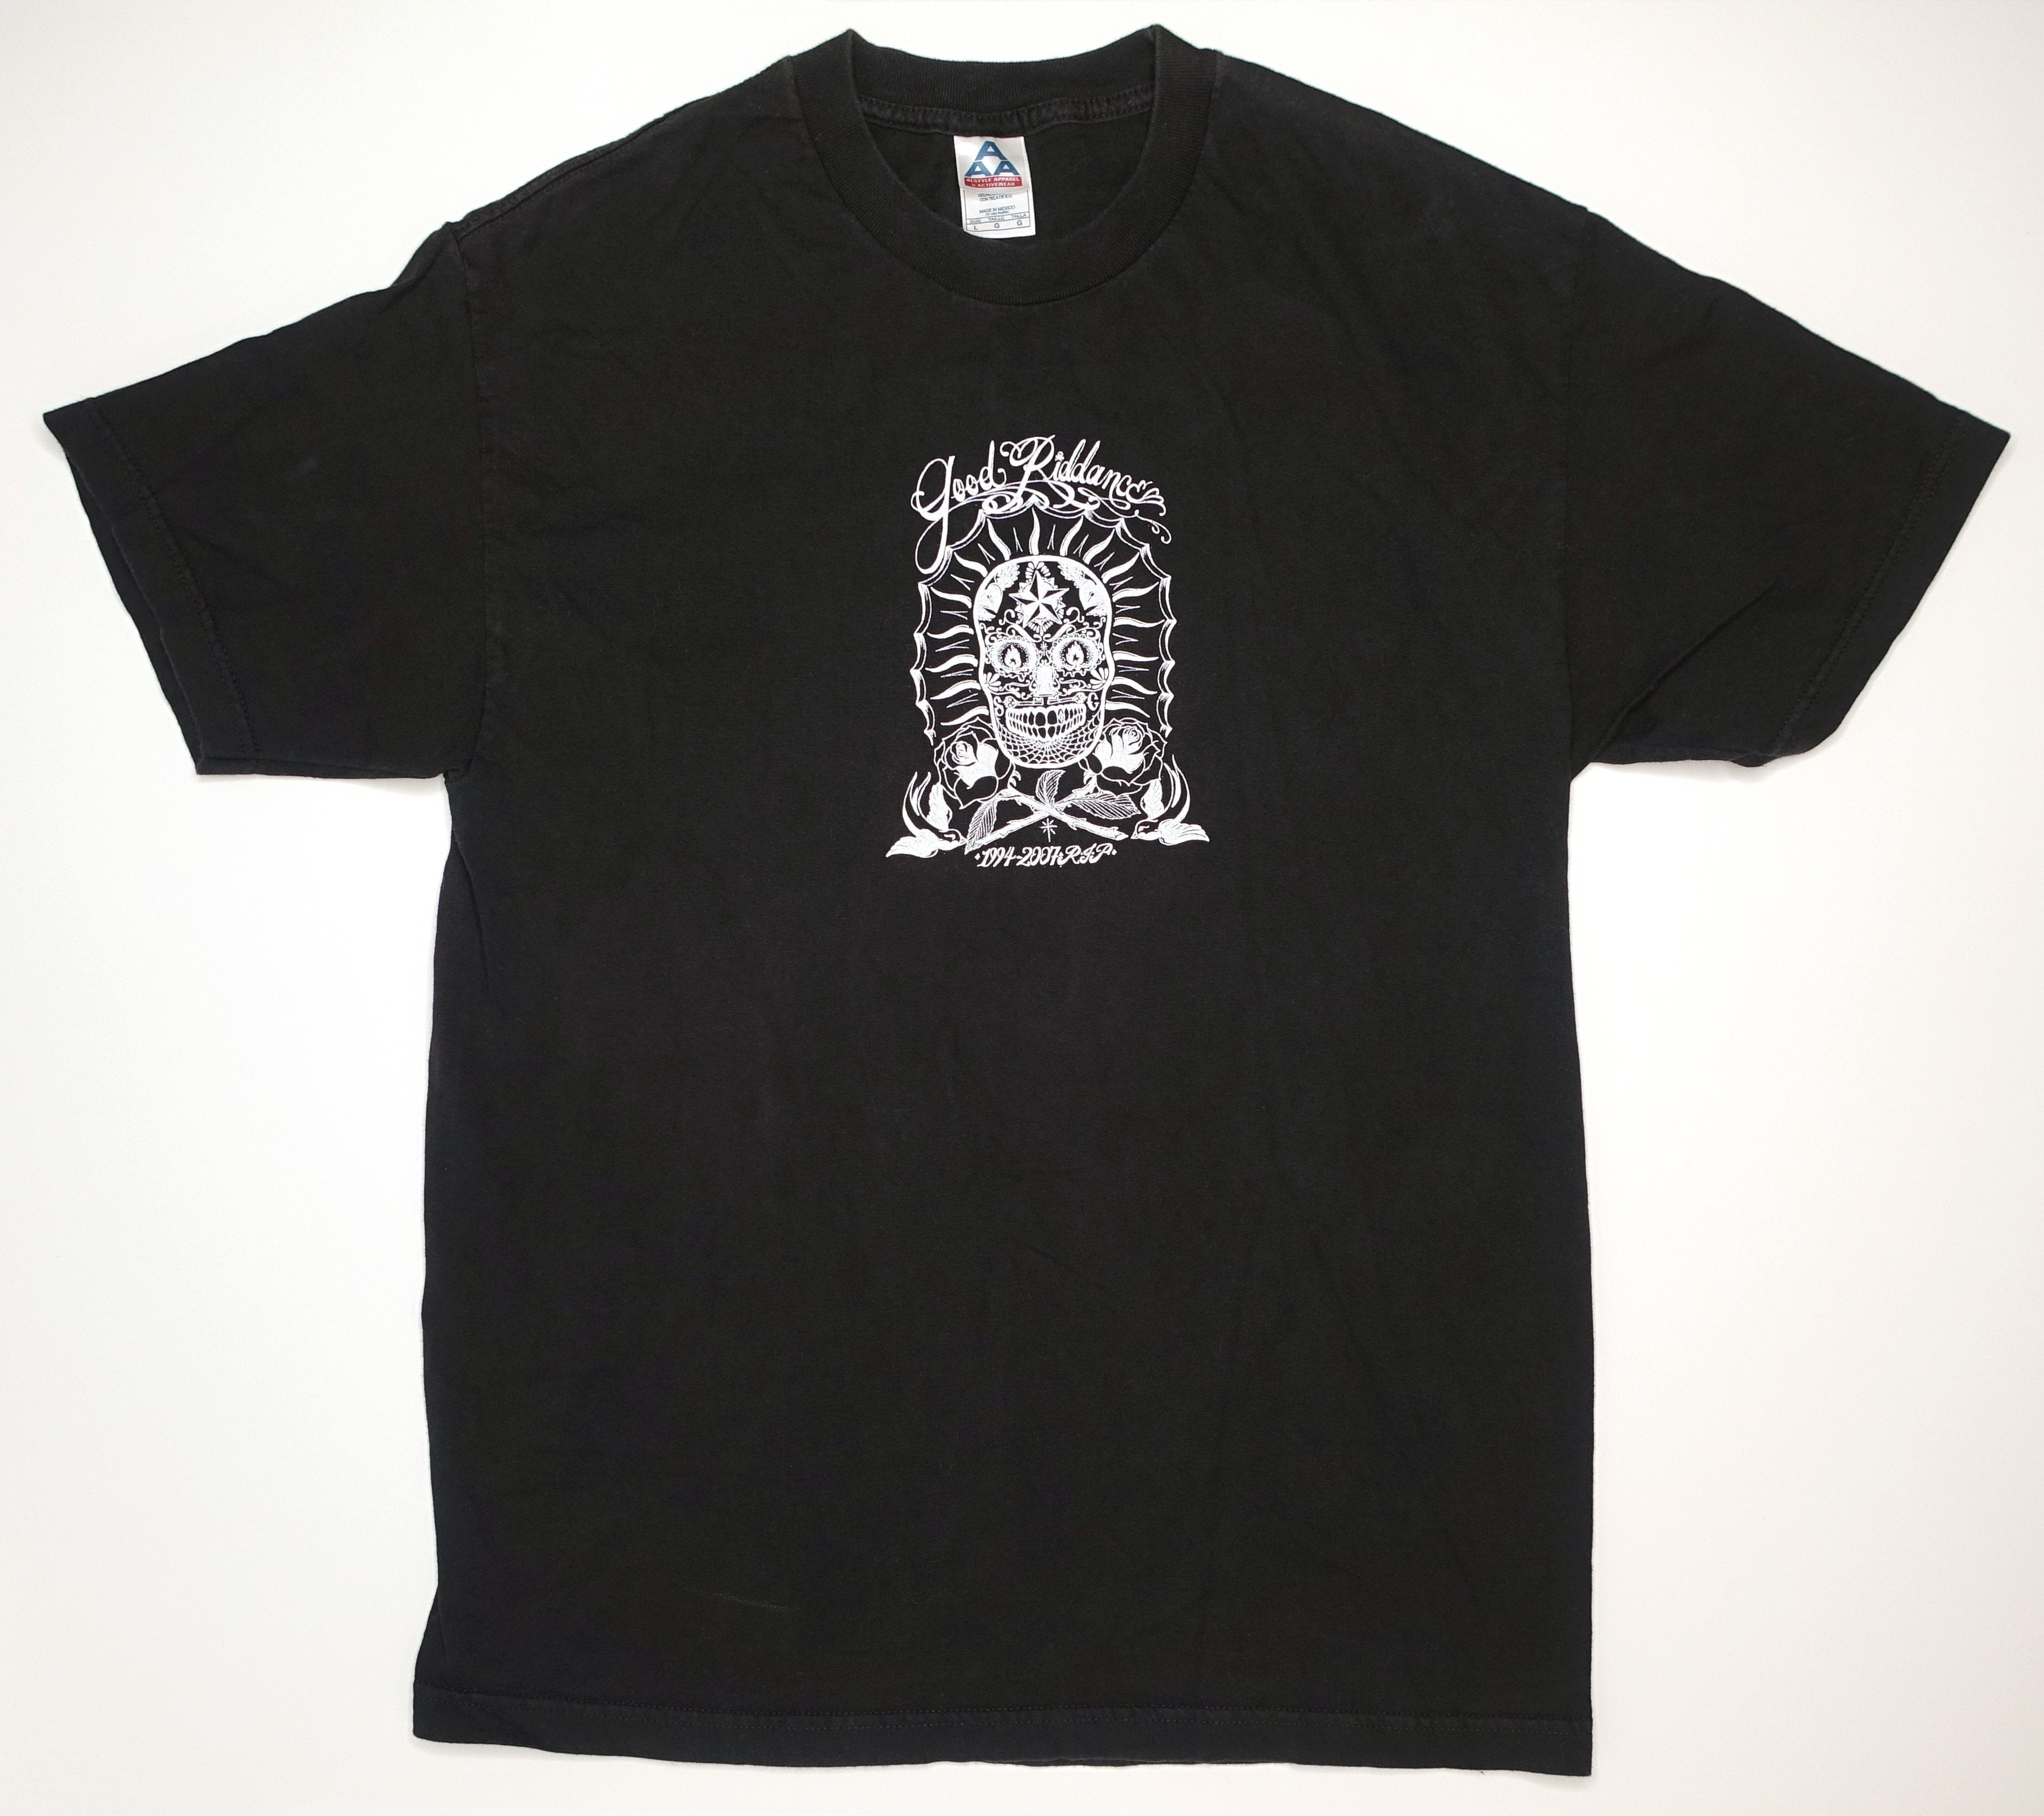 Good Riddance - 1994-2007 R.I.P. Shirt Size Large